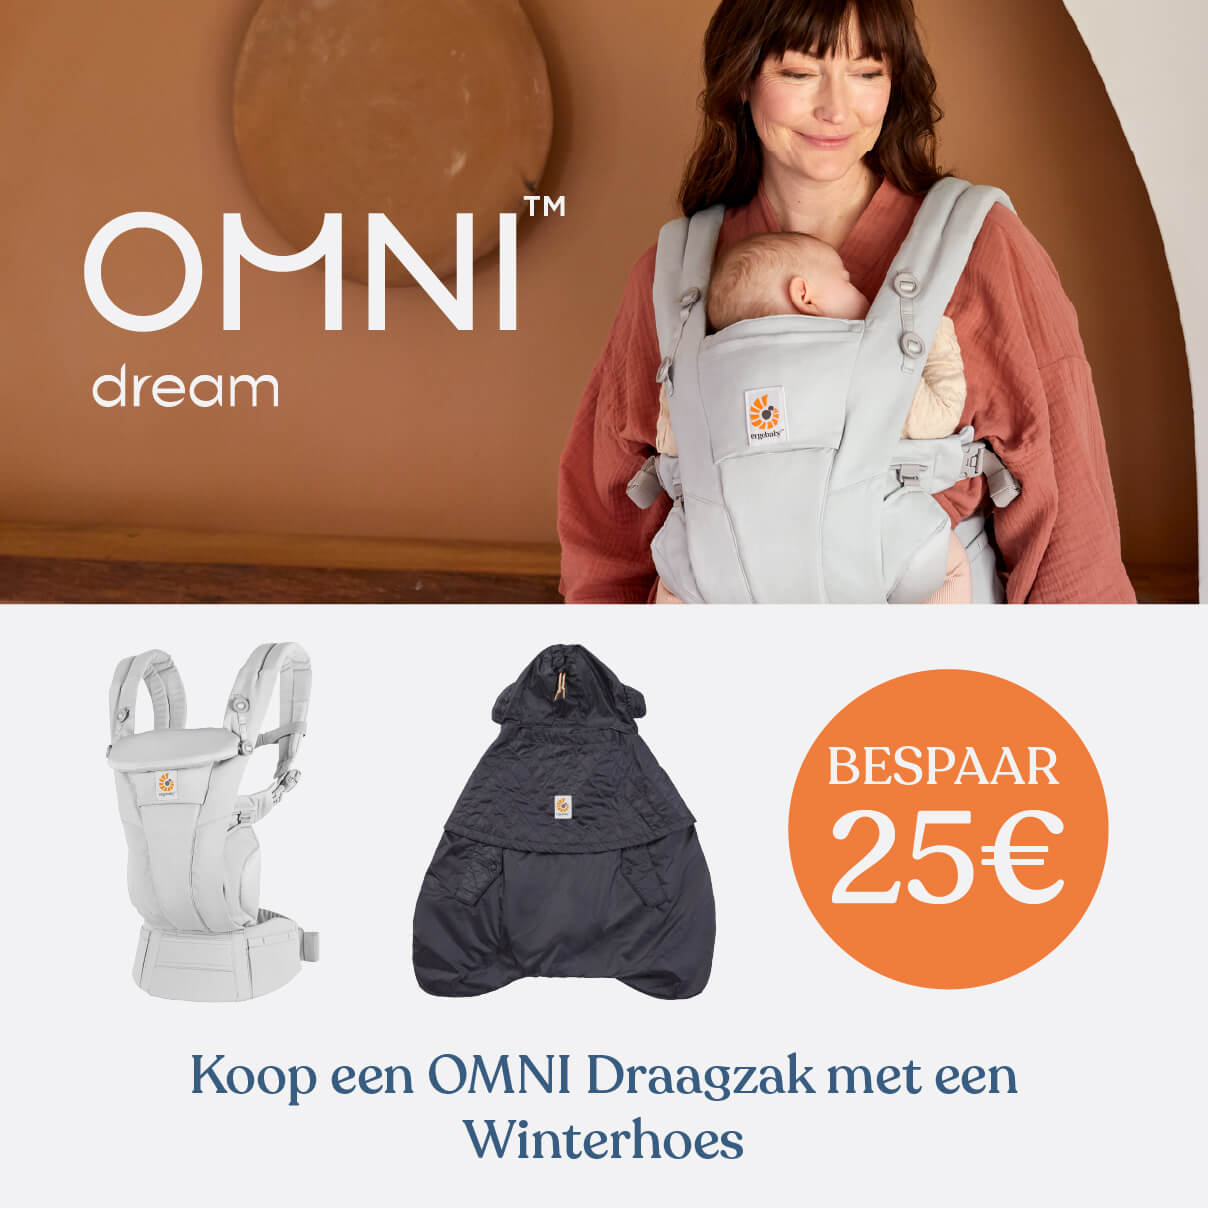 Omni Dream & Winterhoes -25€ 